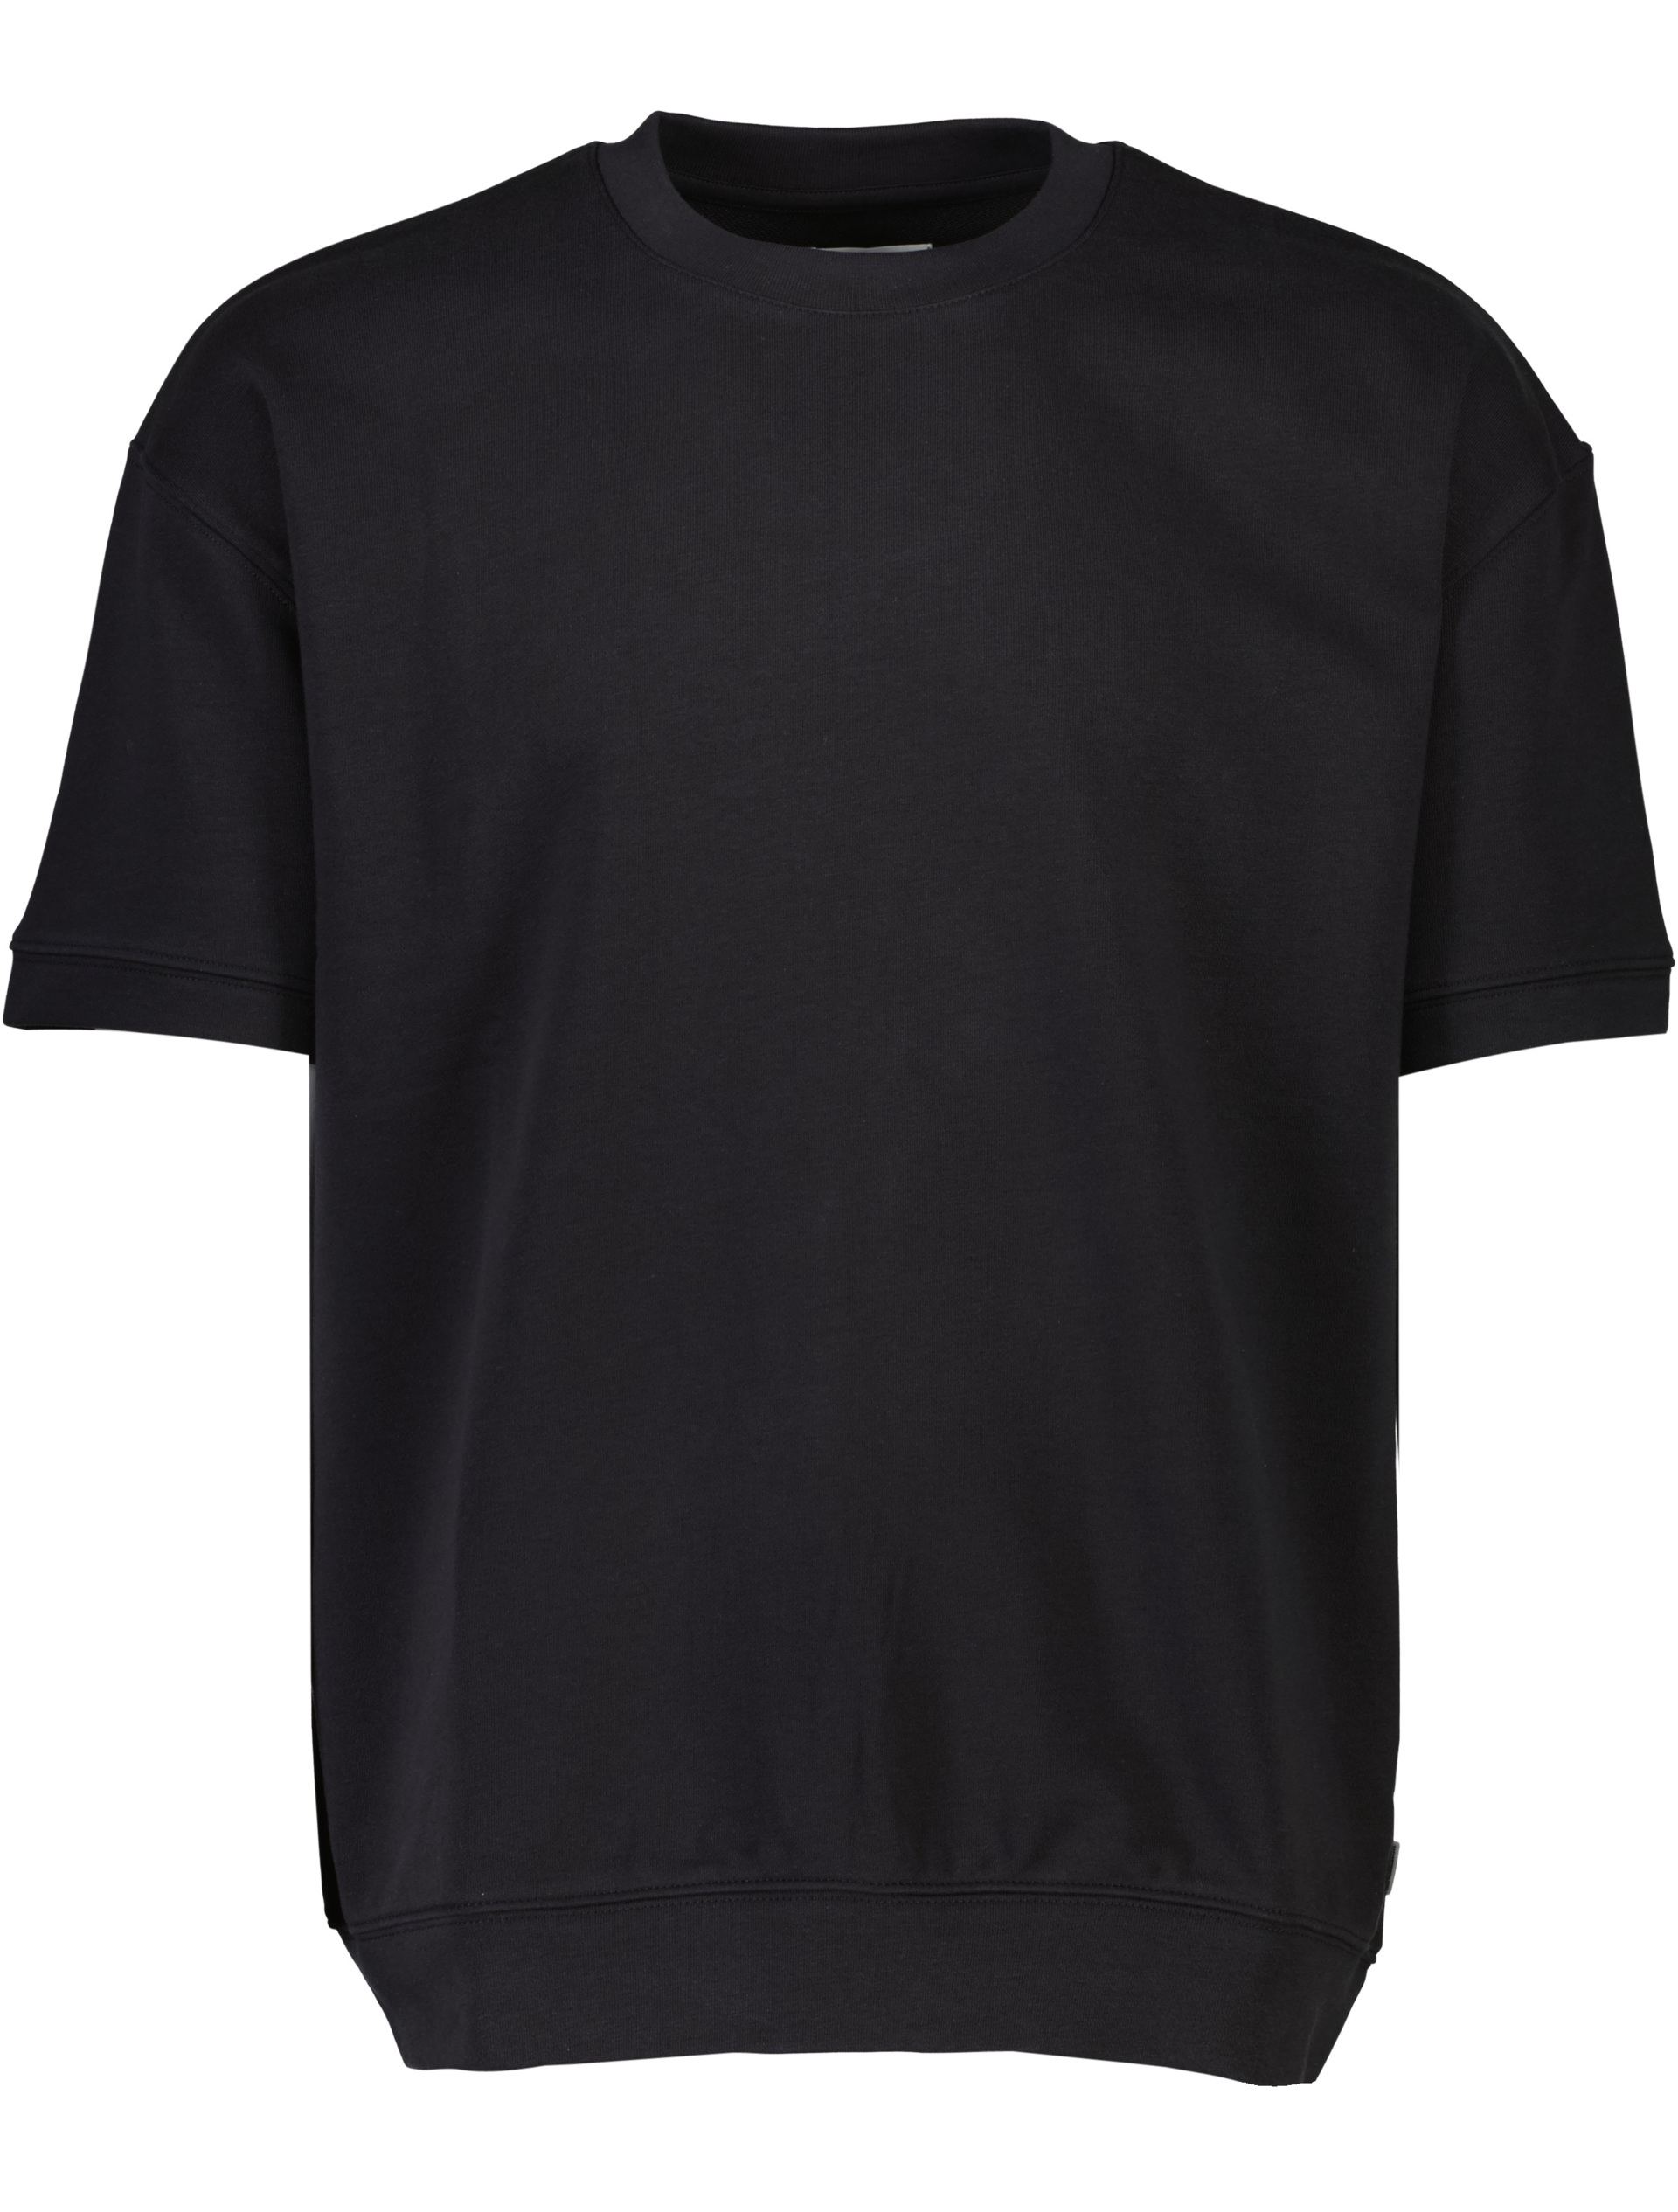 Lindbergh T-shirt svart / black